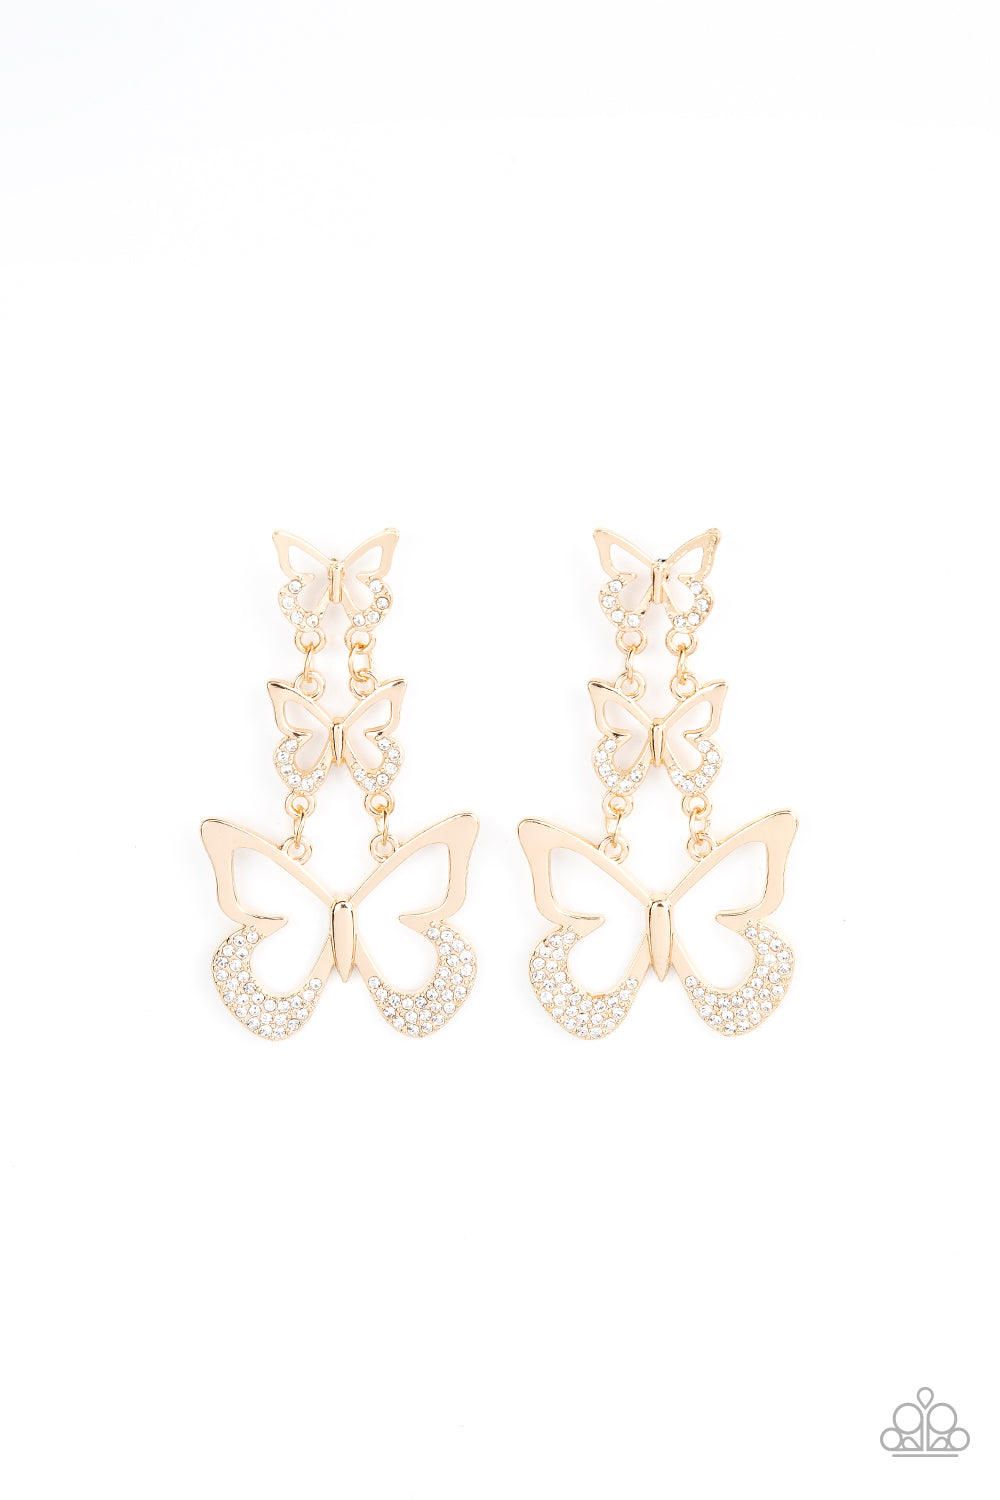 Flamboyant Flutter - Gold Earrings - Paparazzi Accessories - Paparazzi Accessories 